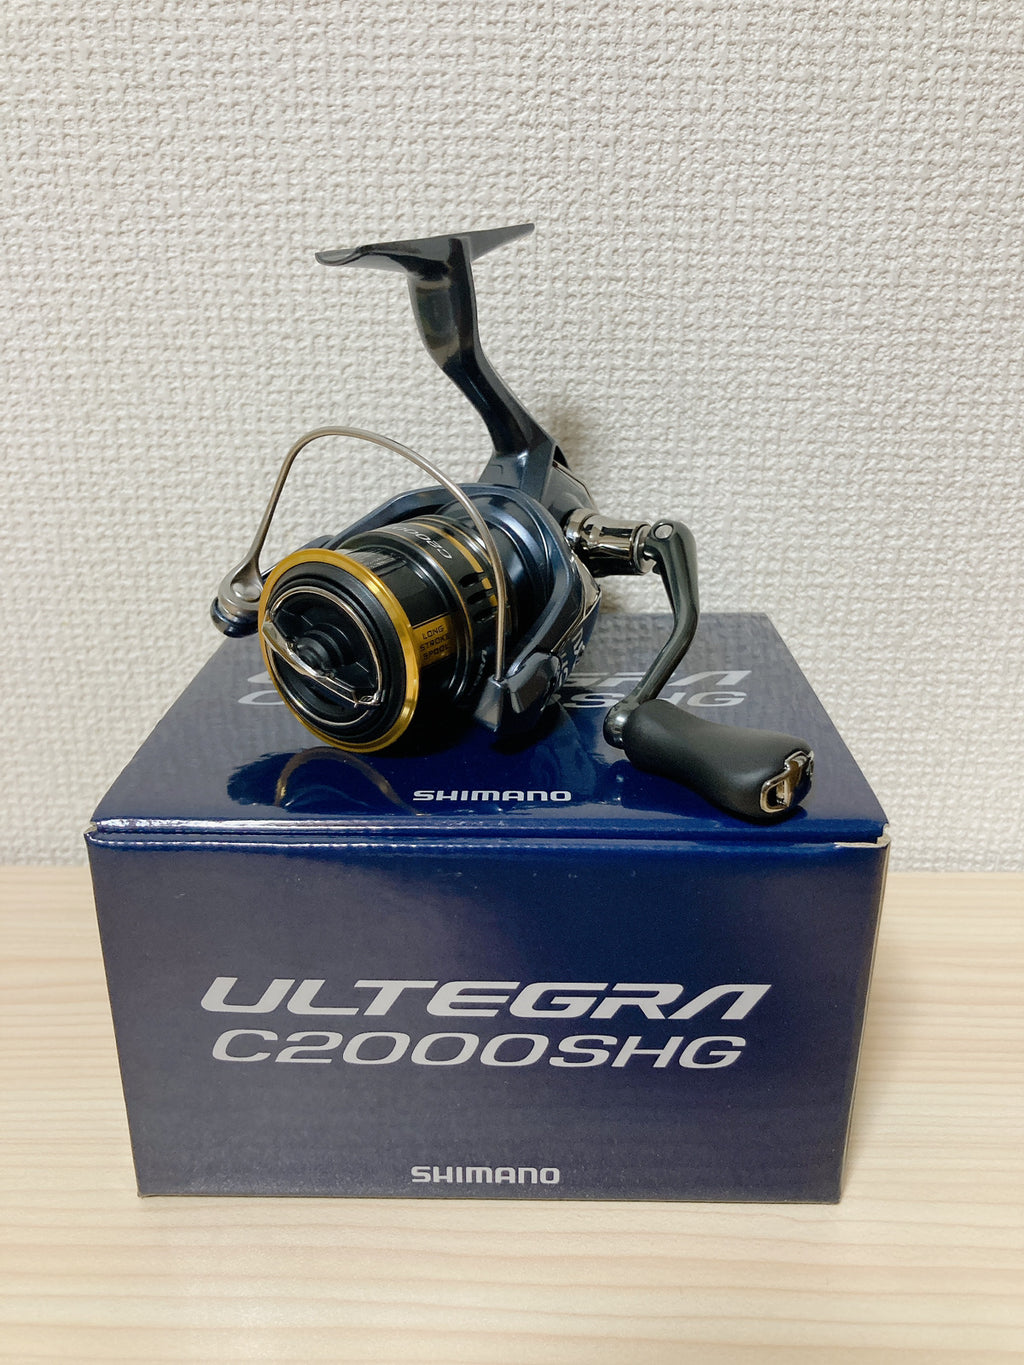 Ultegra C2000Shg Shimano Reel Used Once